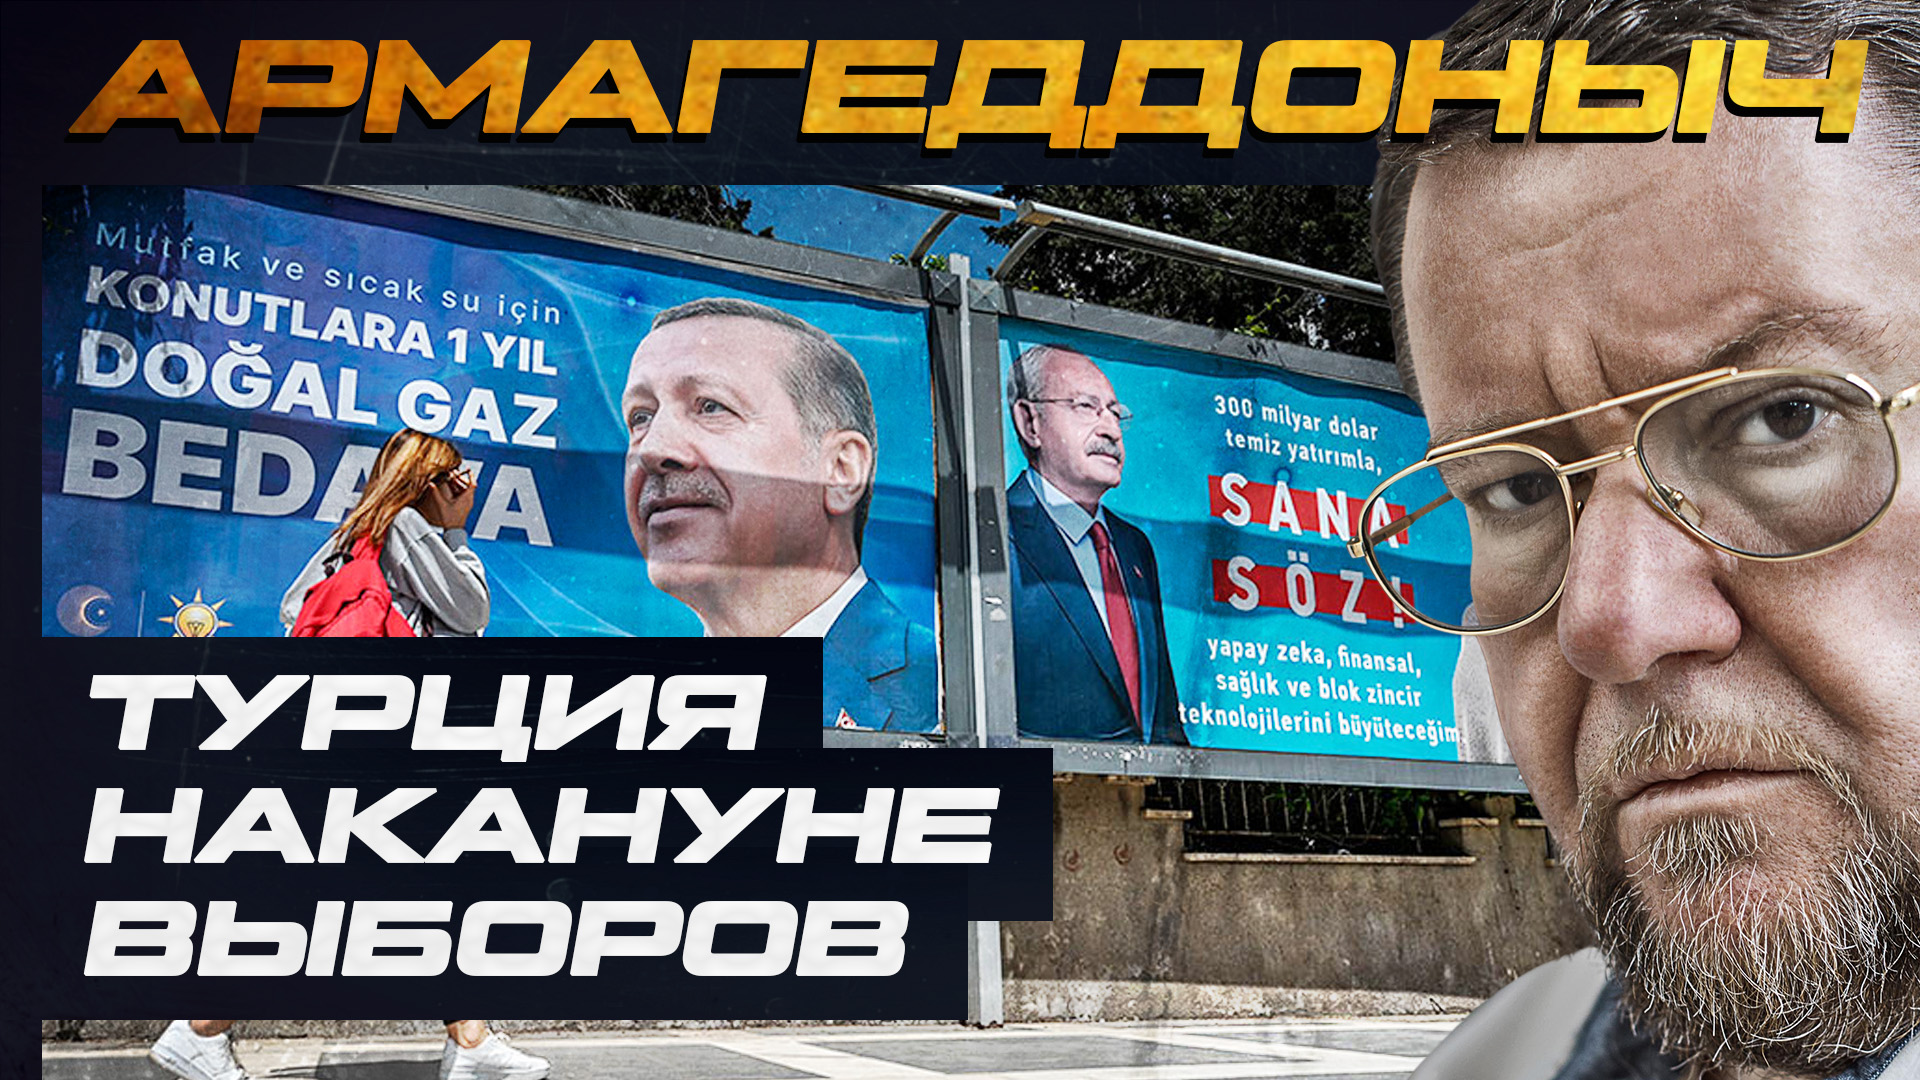 Турция накануне выборов | АРМАГЕДДОНЫЧ